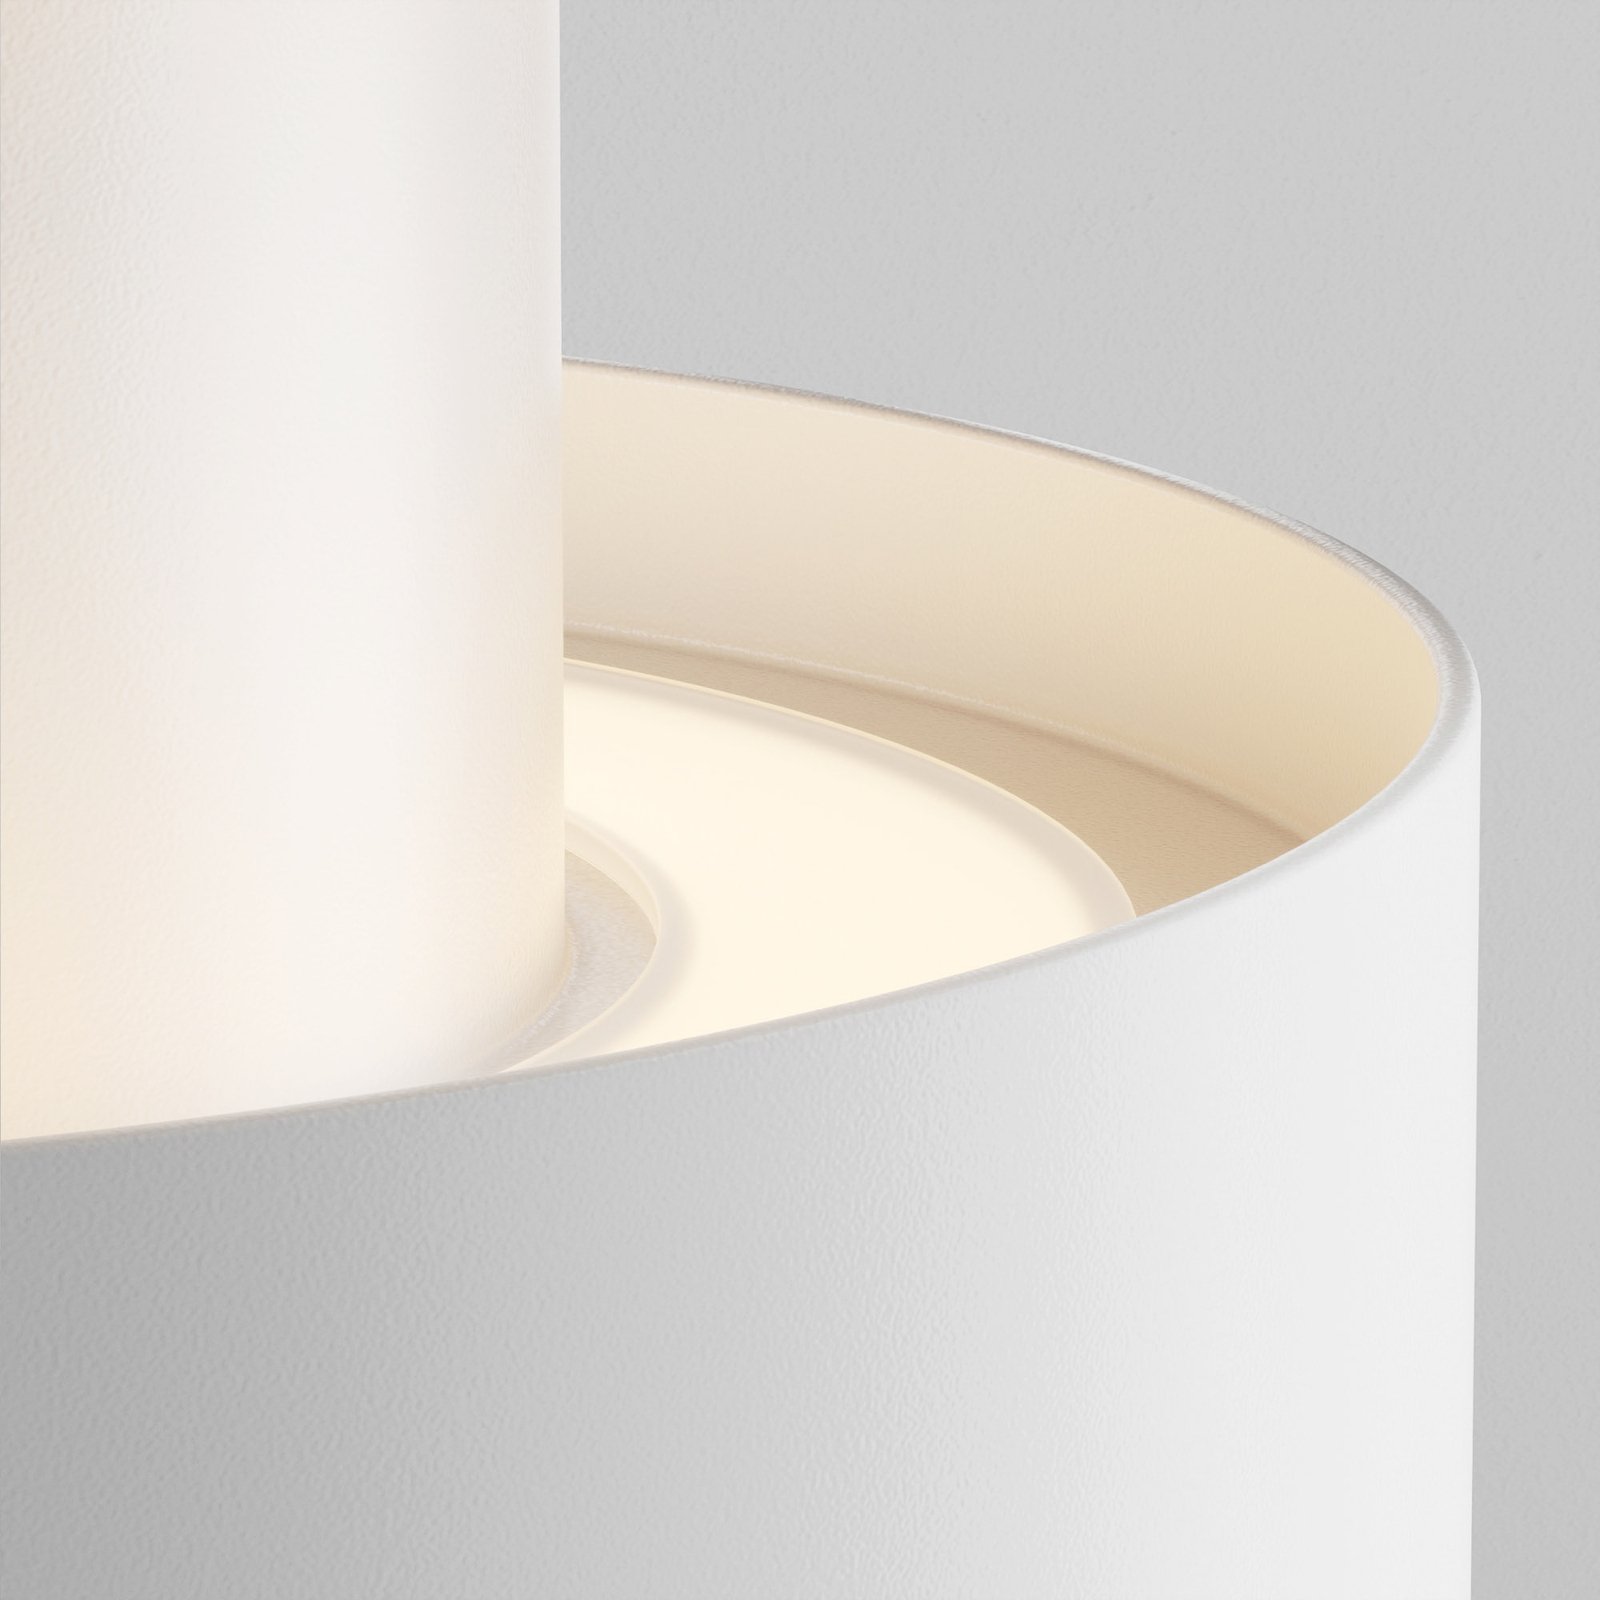 Maytoni Planet LED ceiling light, Ø 12 cm, white